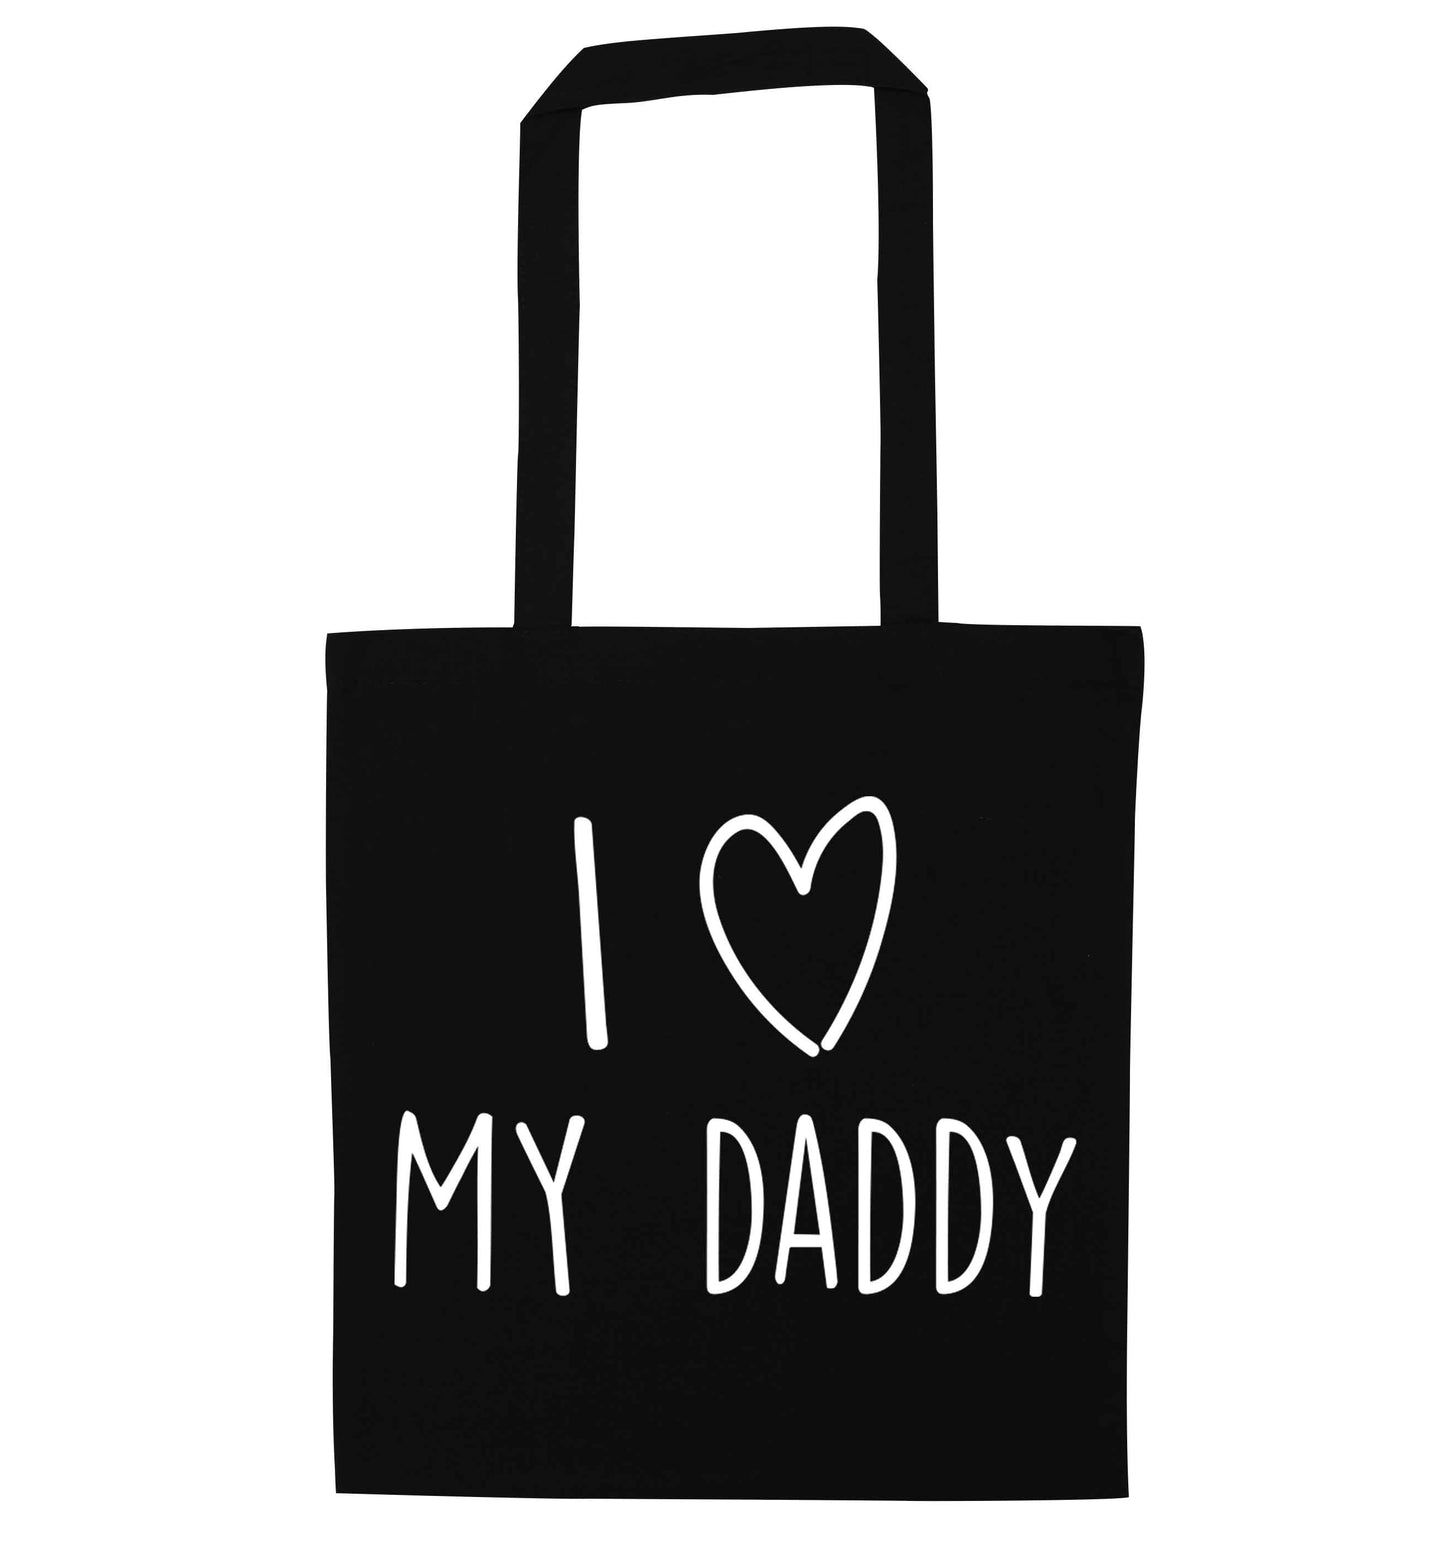 I love my daddy black tote bag